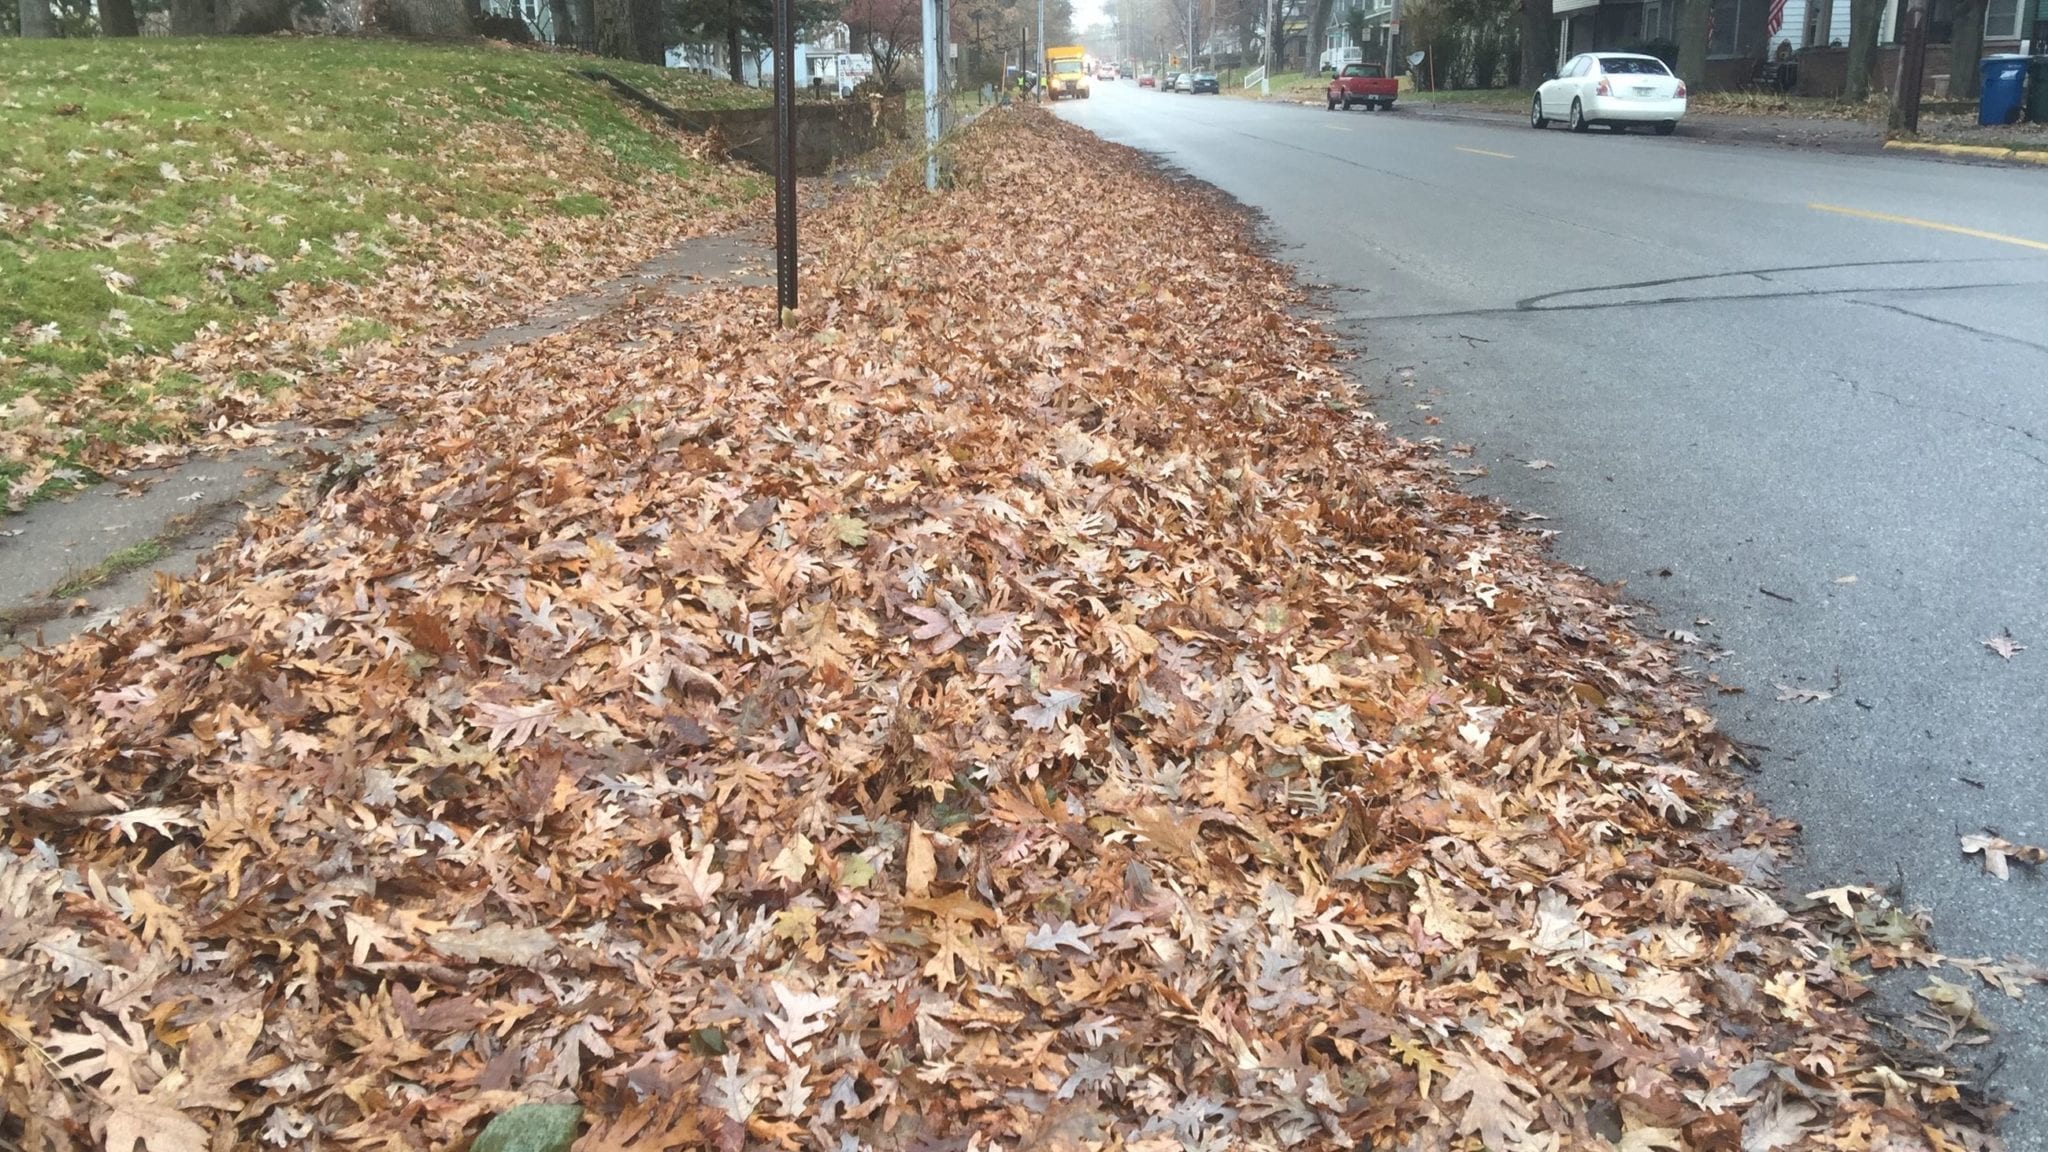 City’s leaf collection effort passes halfway mark